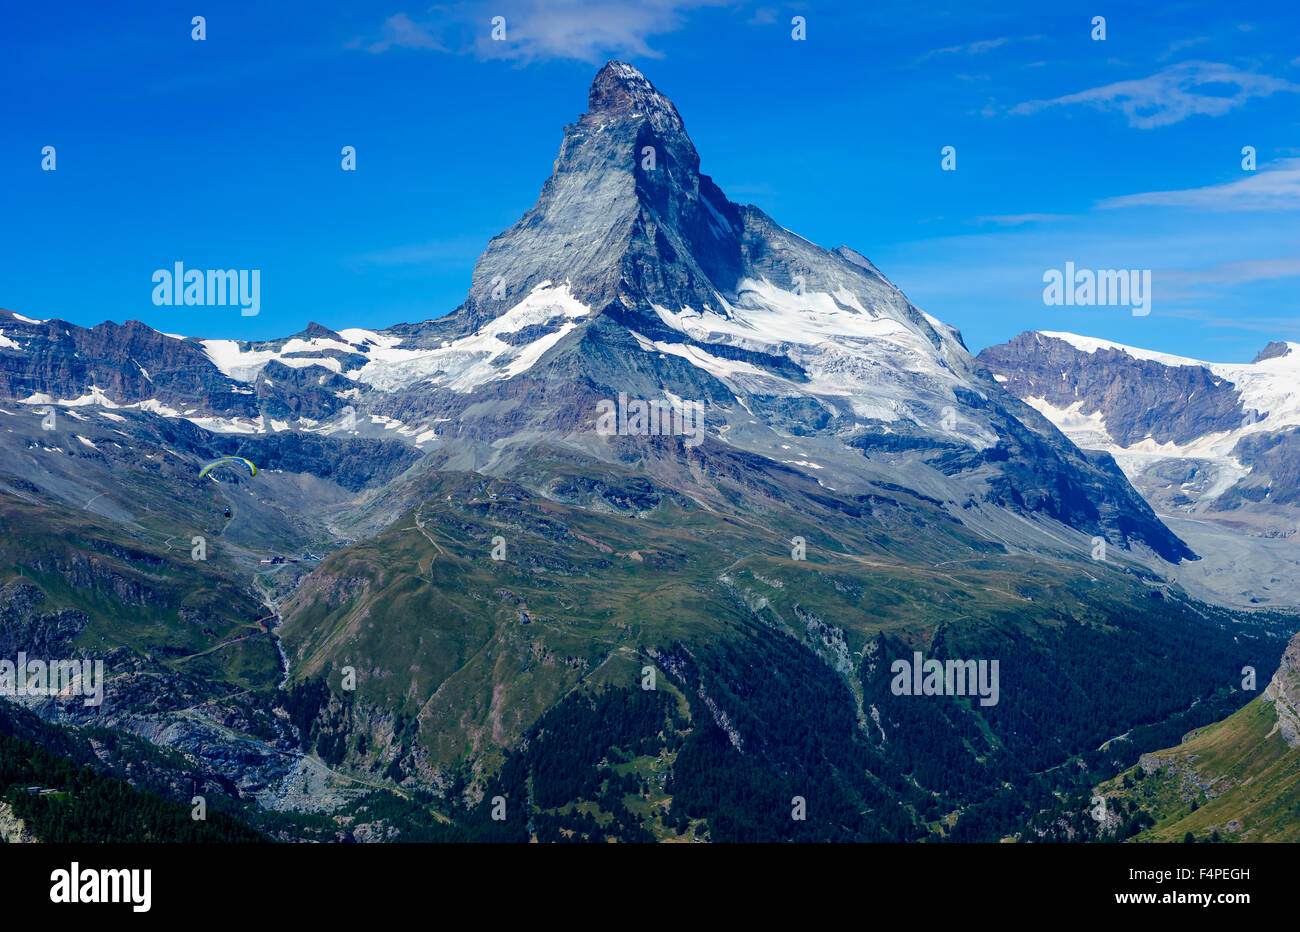 Straight view of the famous Matterhorn peak in the Swiss Alps. July, 2015. Matterhorn, Switzerland. Stock Photo